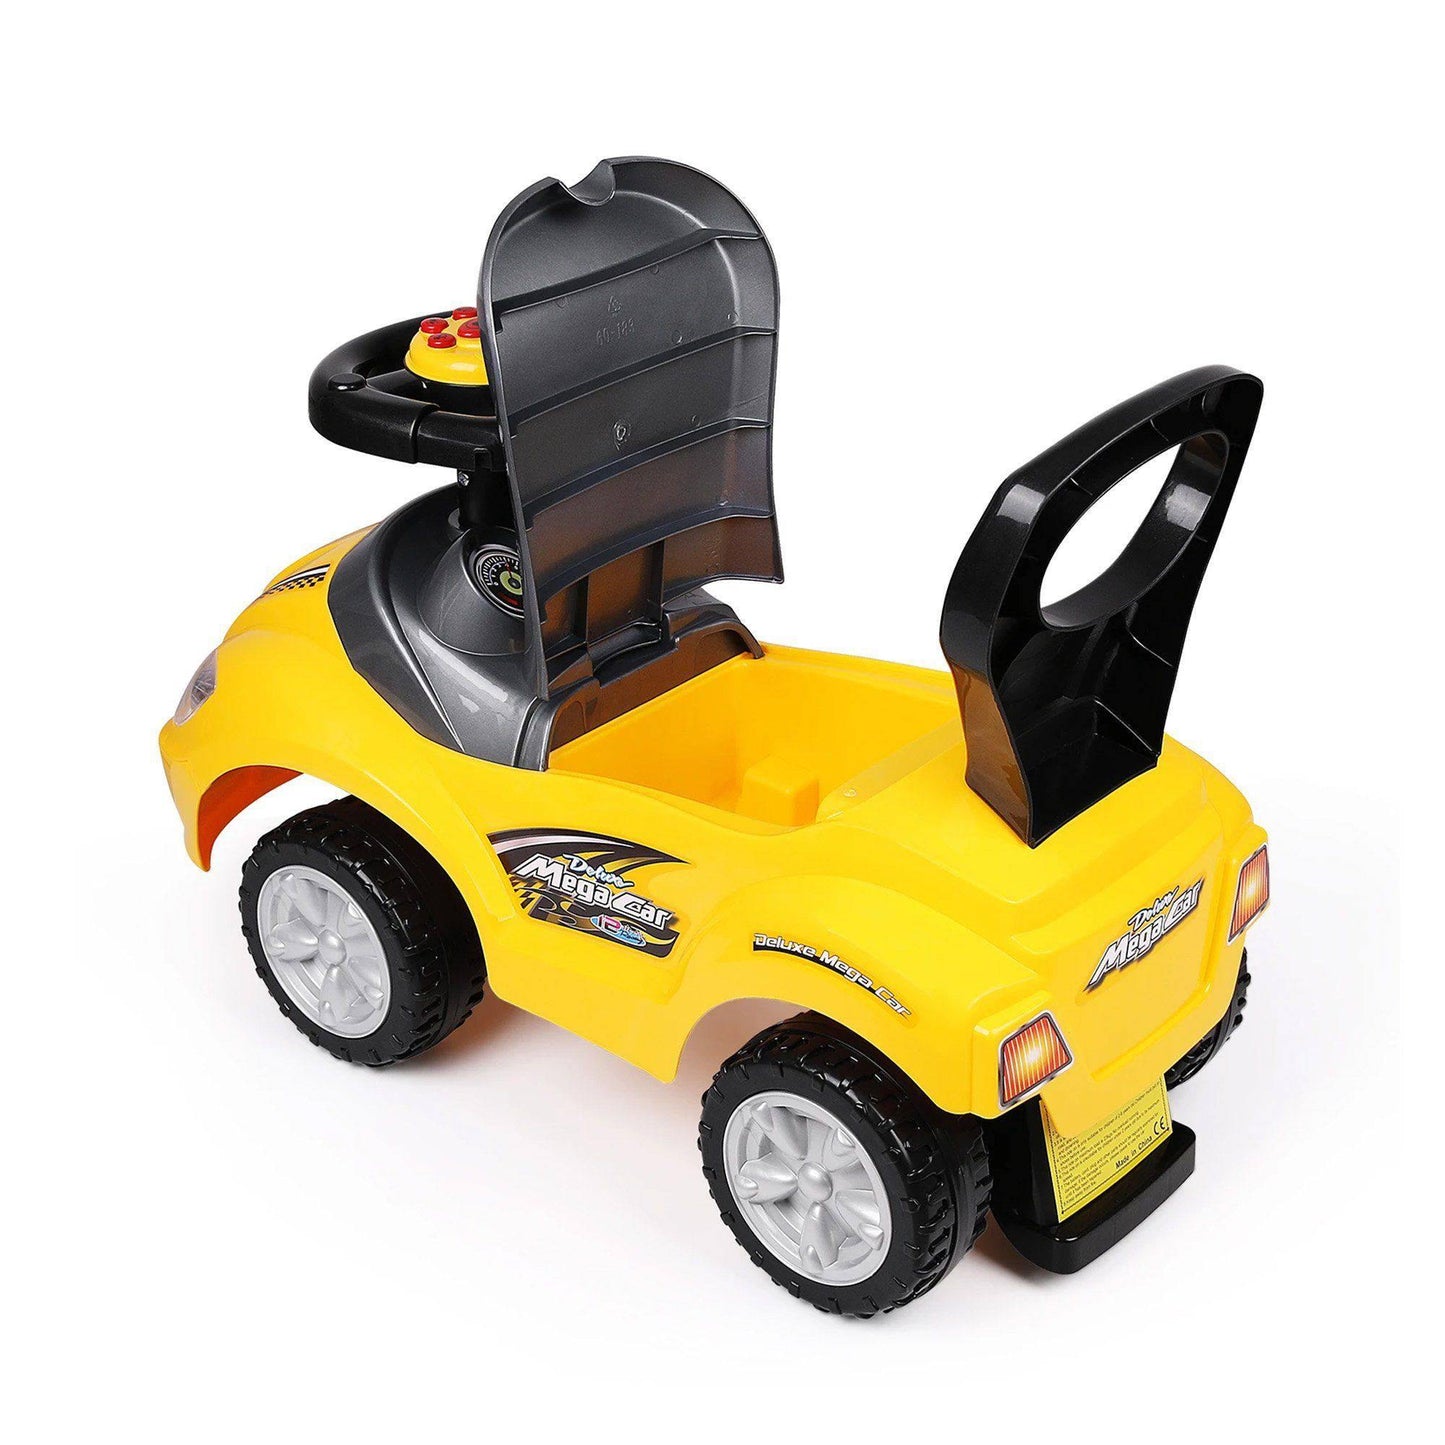 FREDDO Toys 3-In-1 Deluxe Ride on Push car